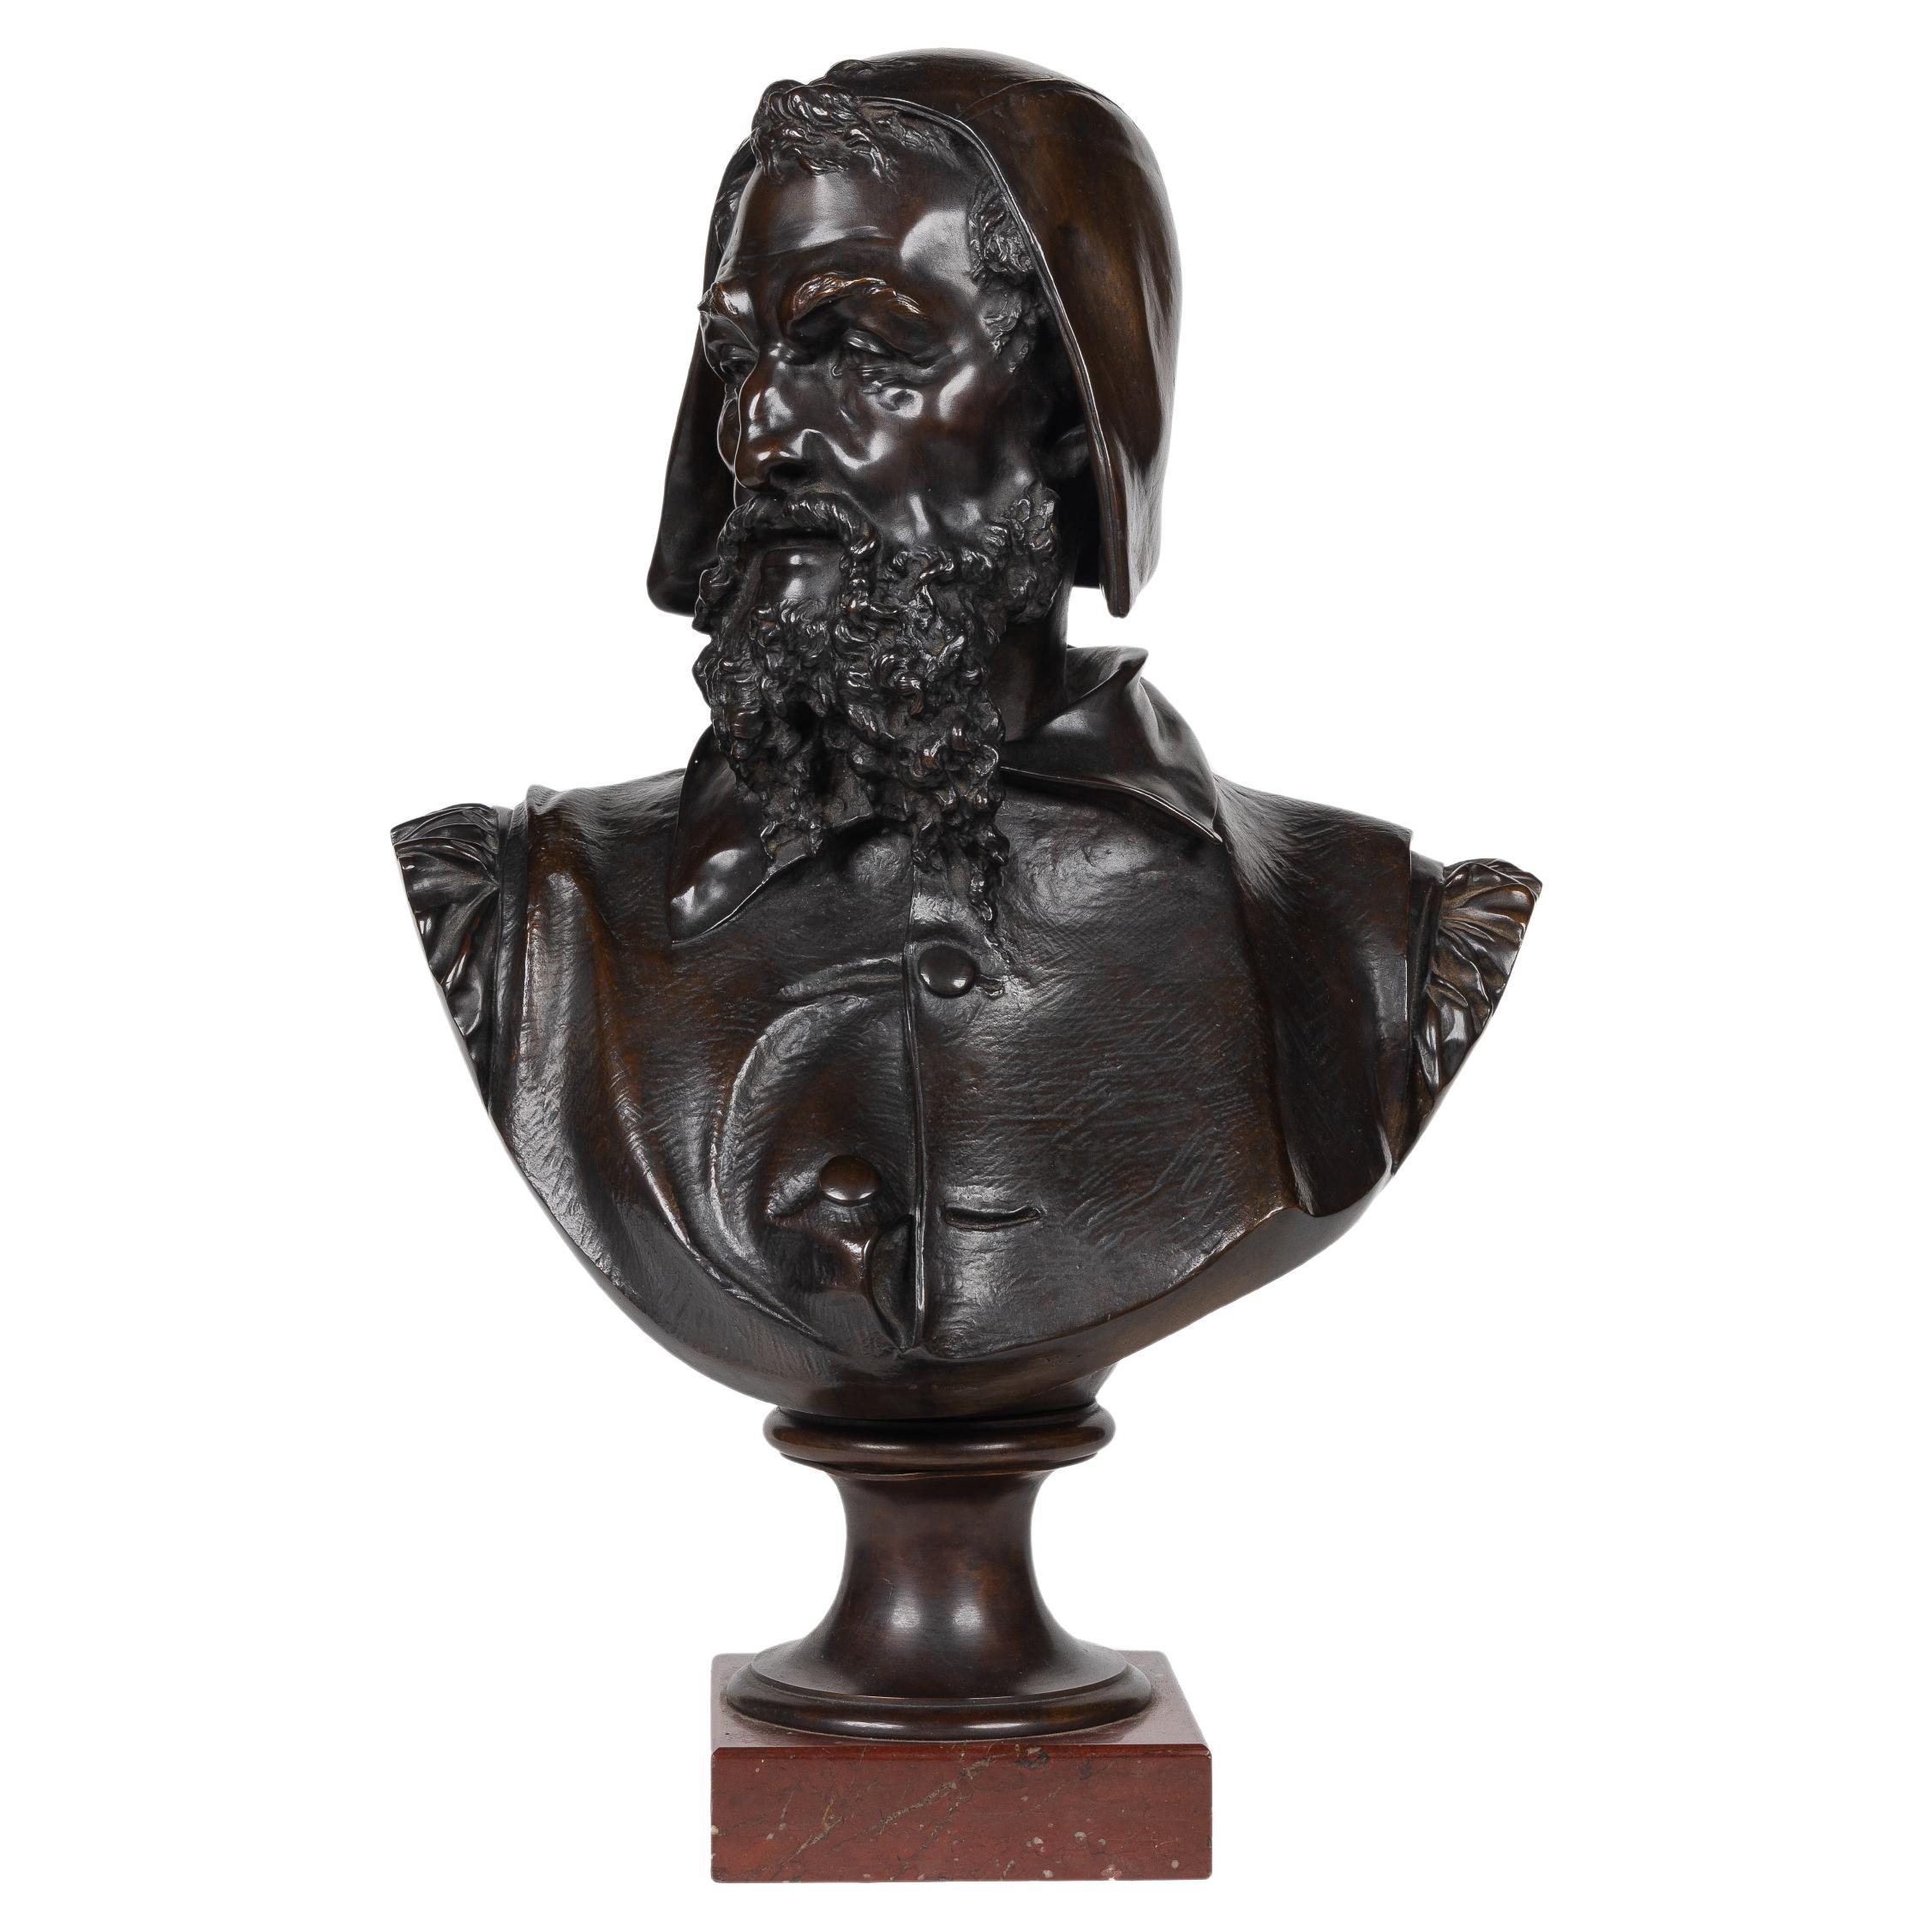 Albert-Ernest Carrier-Belleuse, Un raro e importante busto de bronce de Miguel Ángel